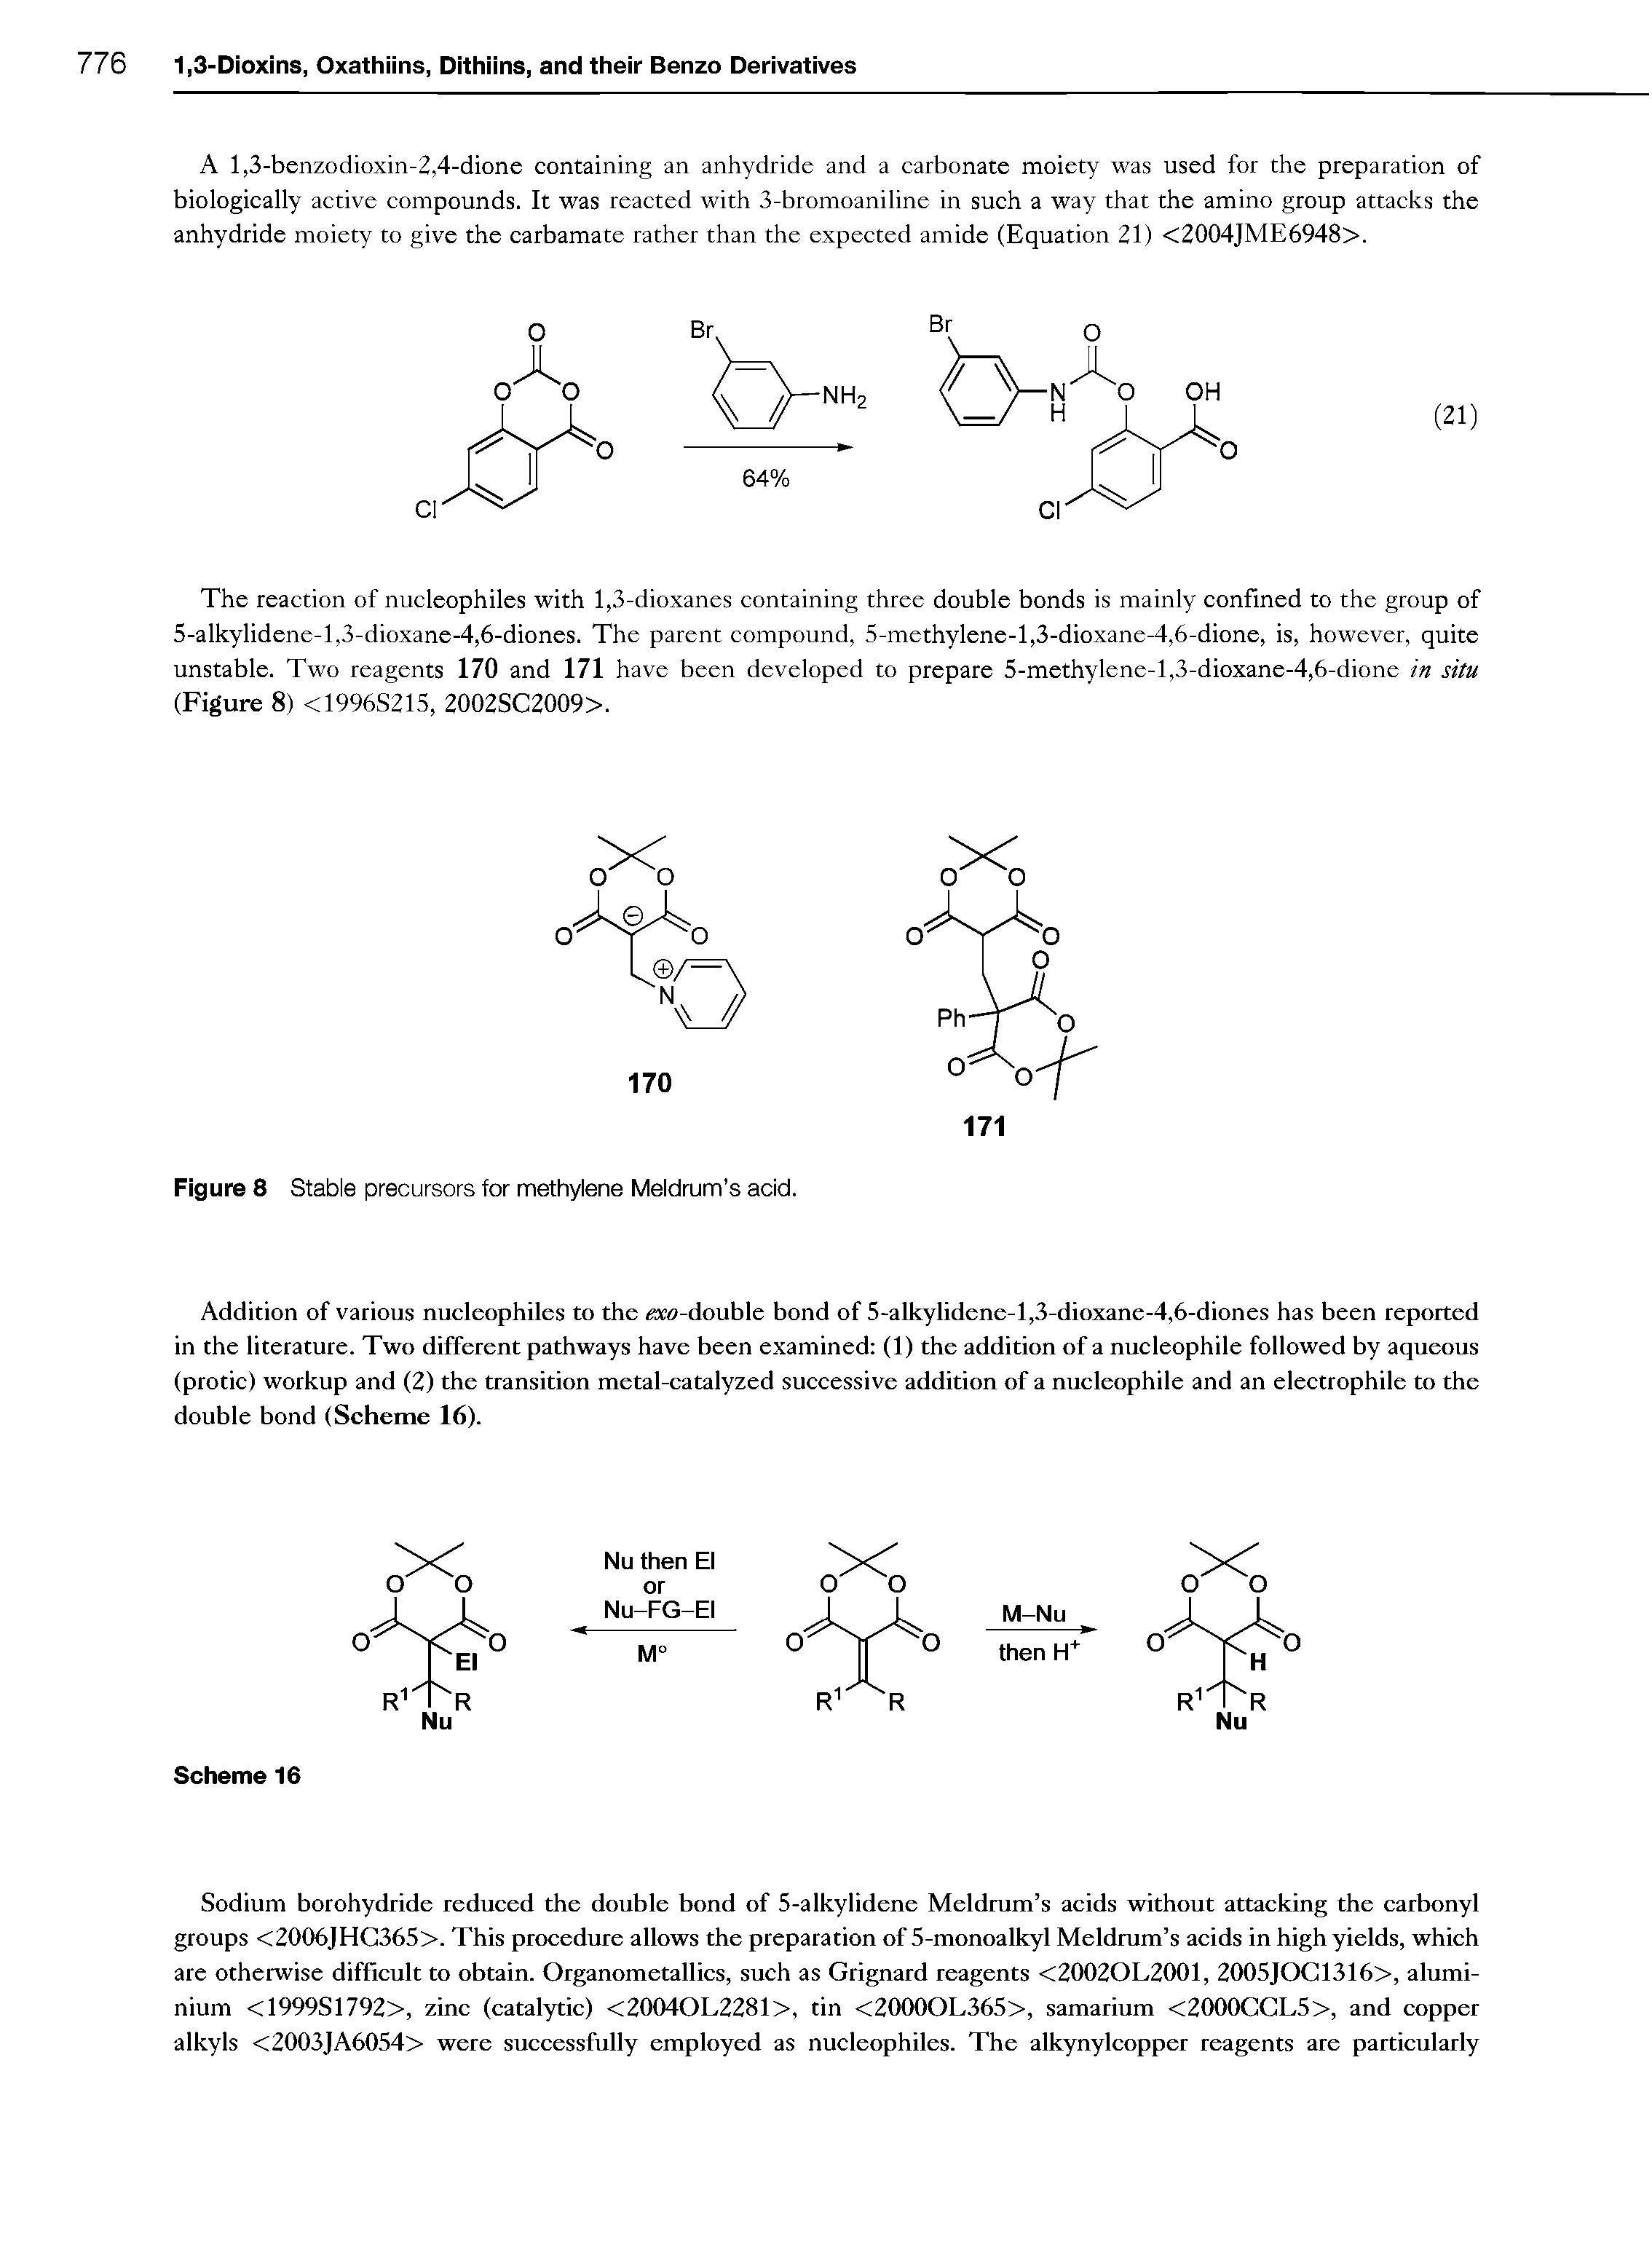 Figure 8 Stable precursors for methylene Meldrum s acid.